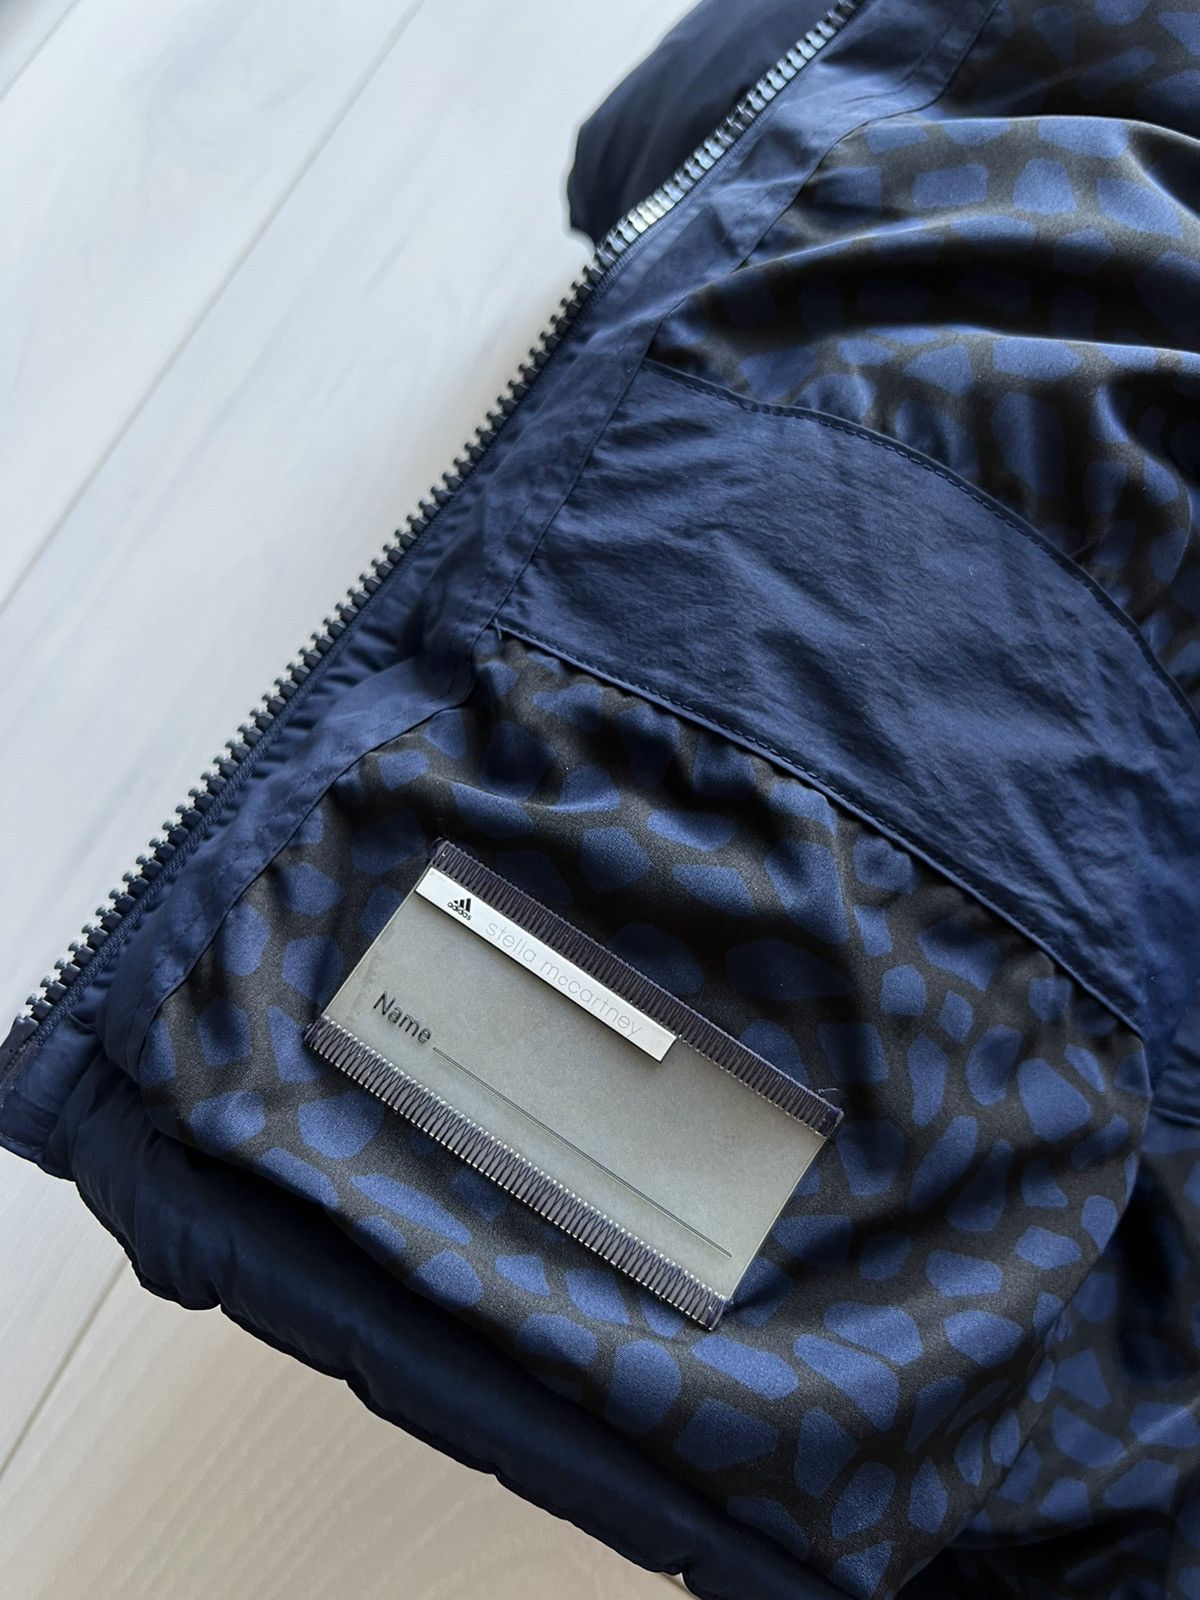 Adidas Adidas x Stella McCartney Oversized Puffer Jacket Sample 36 Size US M / EU 48-50 / 2 - 10 Thumbnail